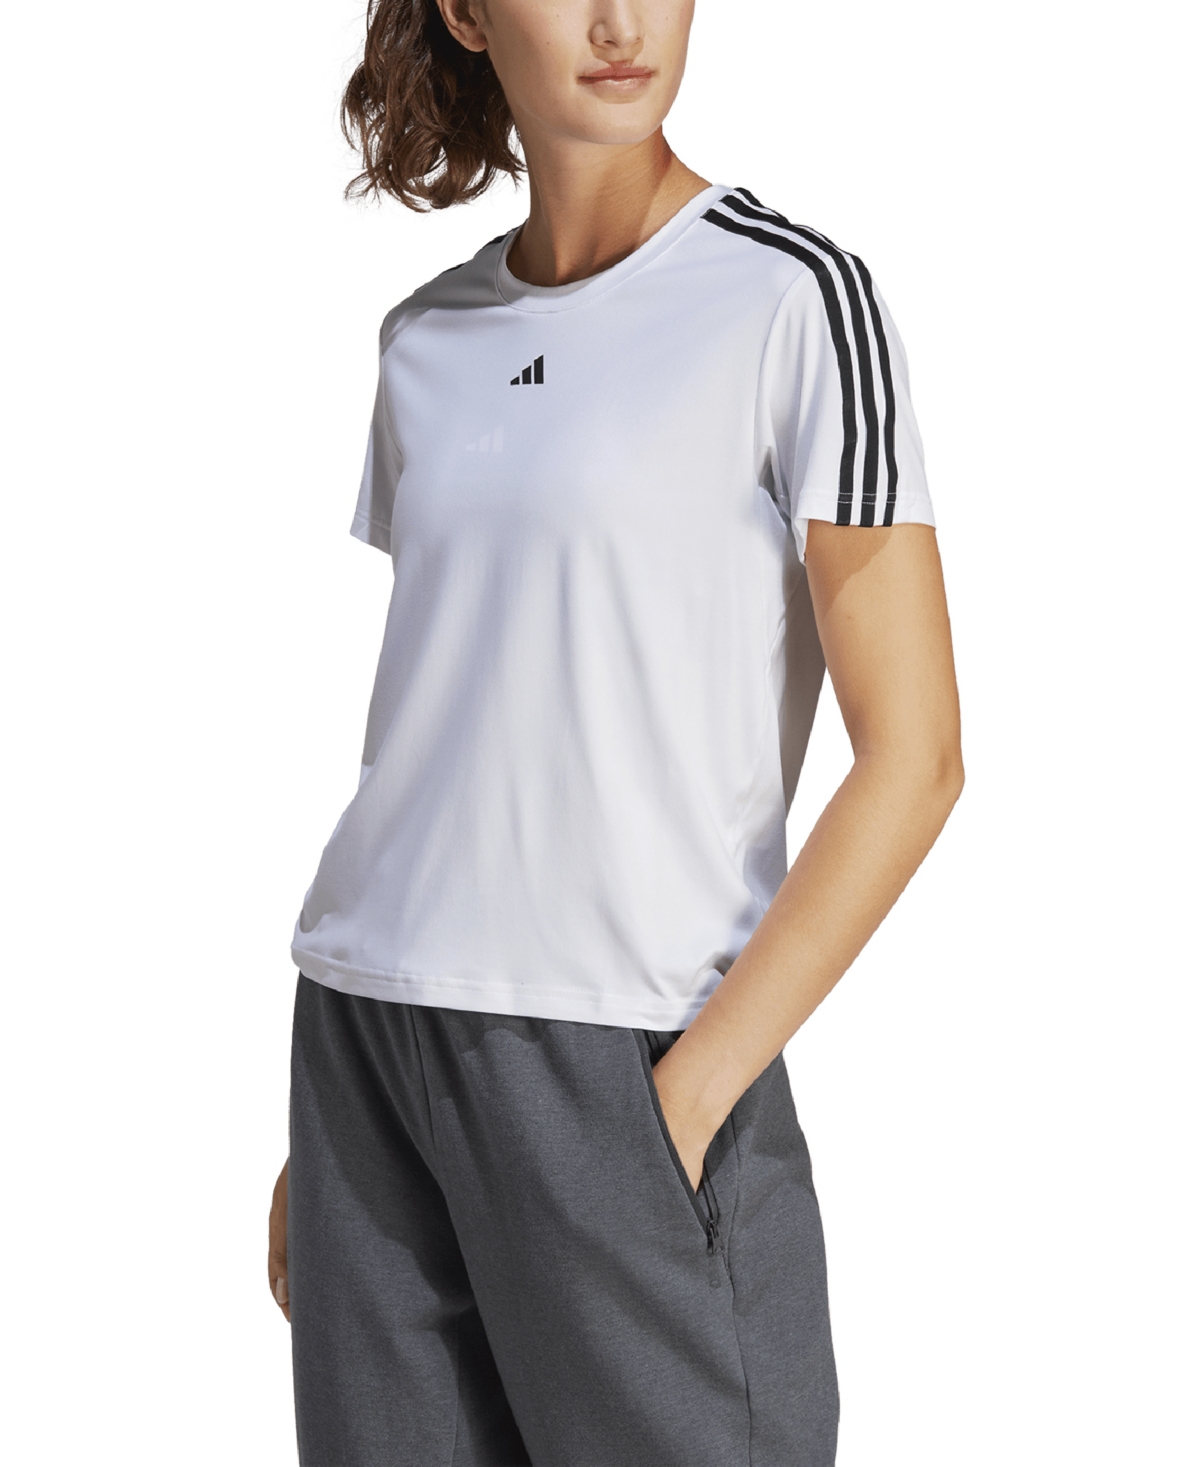 Adidas Originals Adidas Aeroready Train Essentials 3-stripes Tee In White And Black